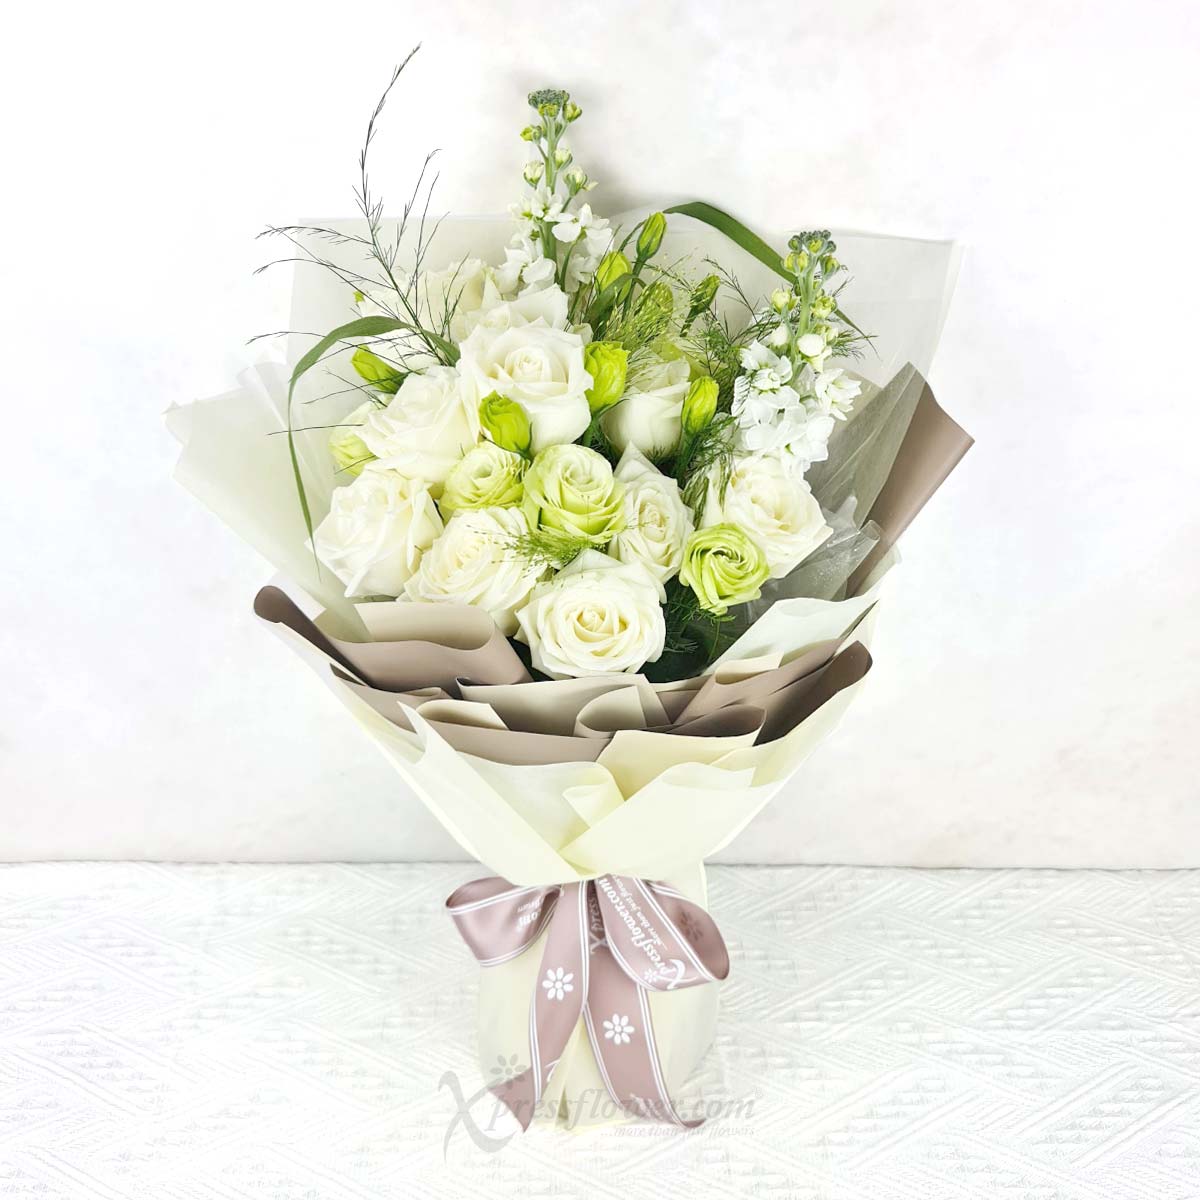 VDBQ2408_Pure Bliss 12 White Roses_1B